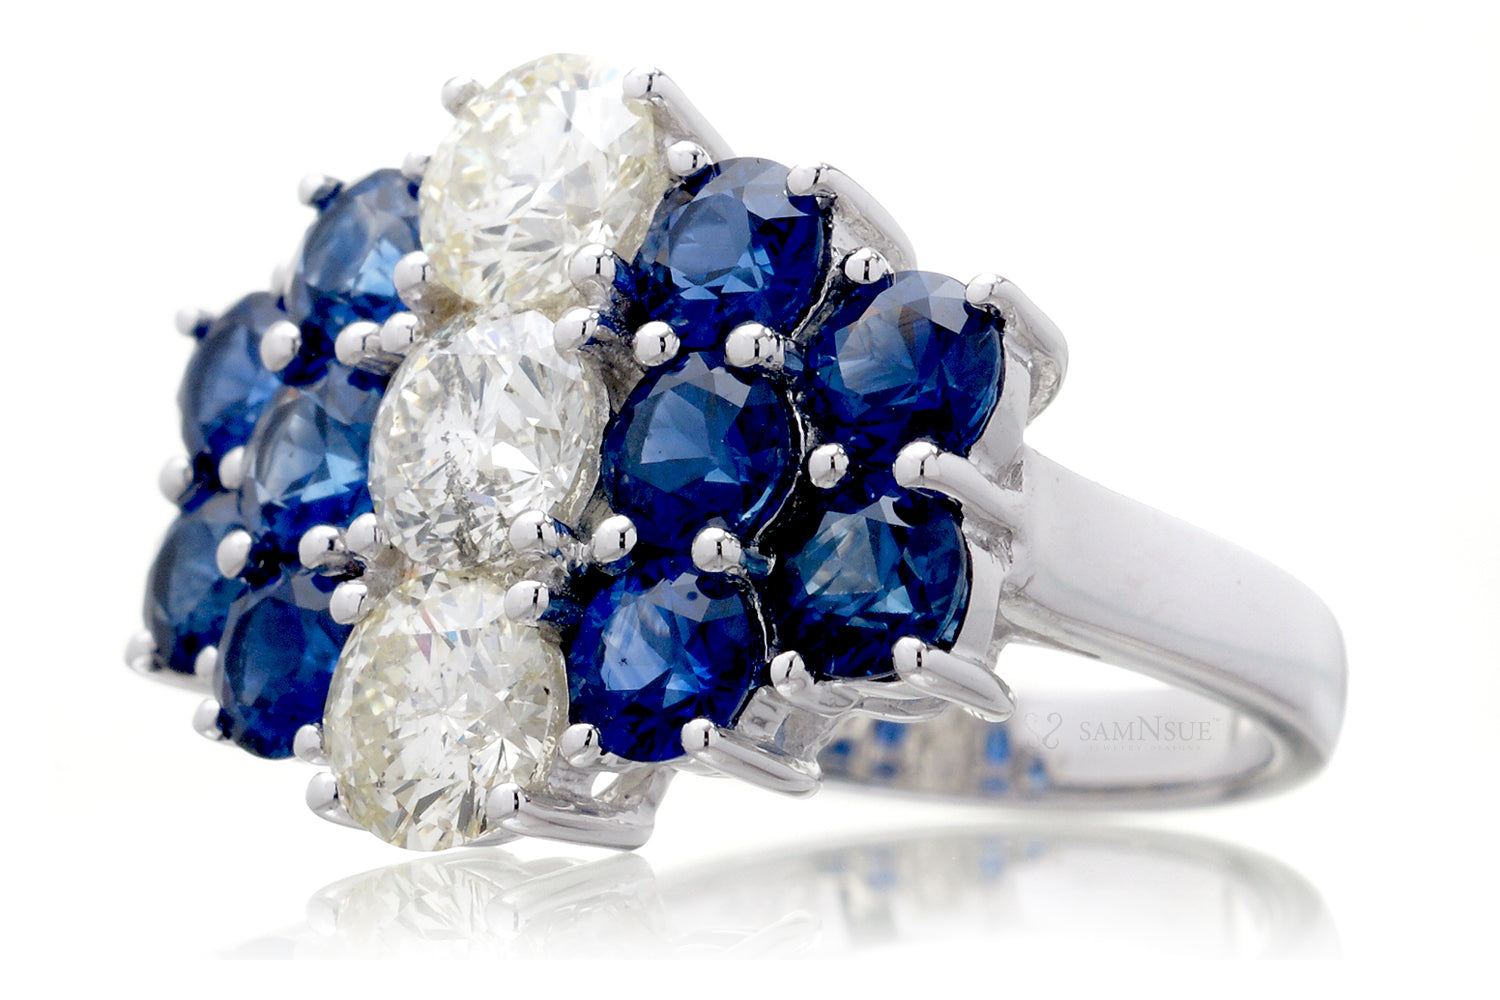 The Bettina Sapphire Ring